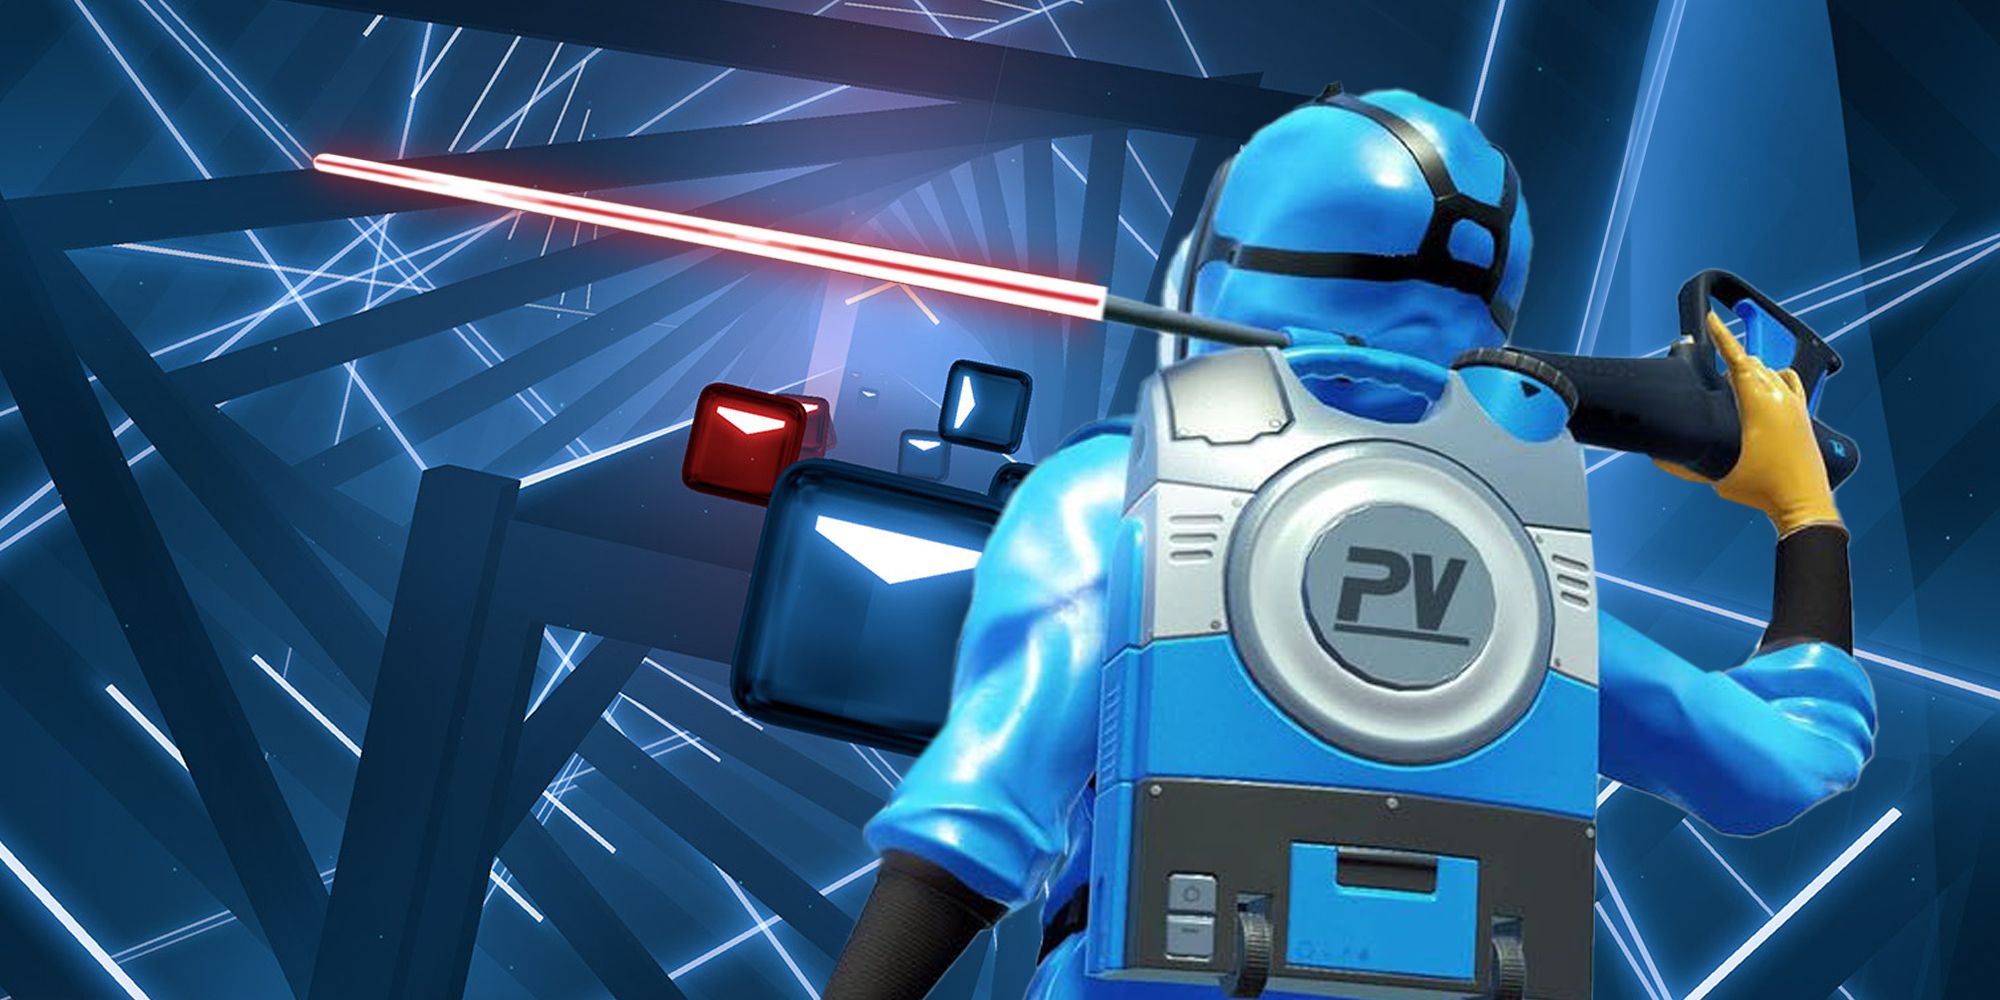 PowerWash Simulator VR release date revealed